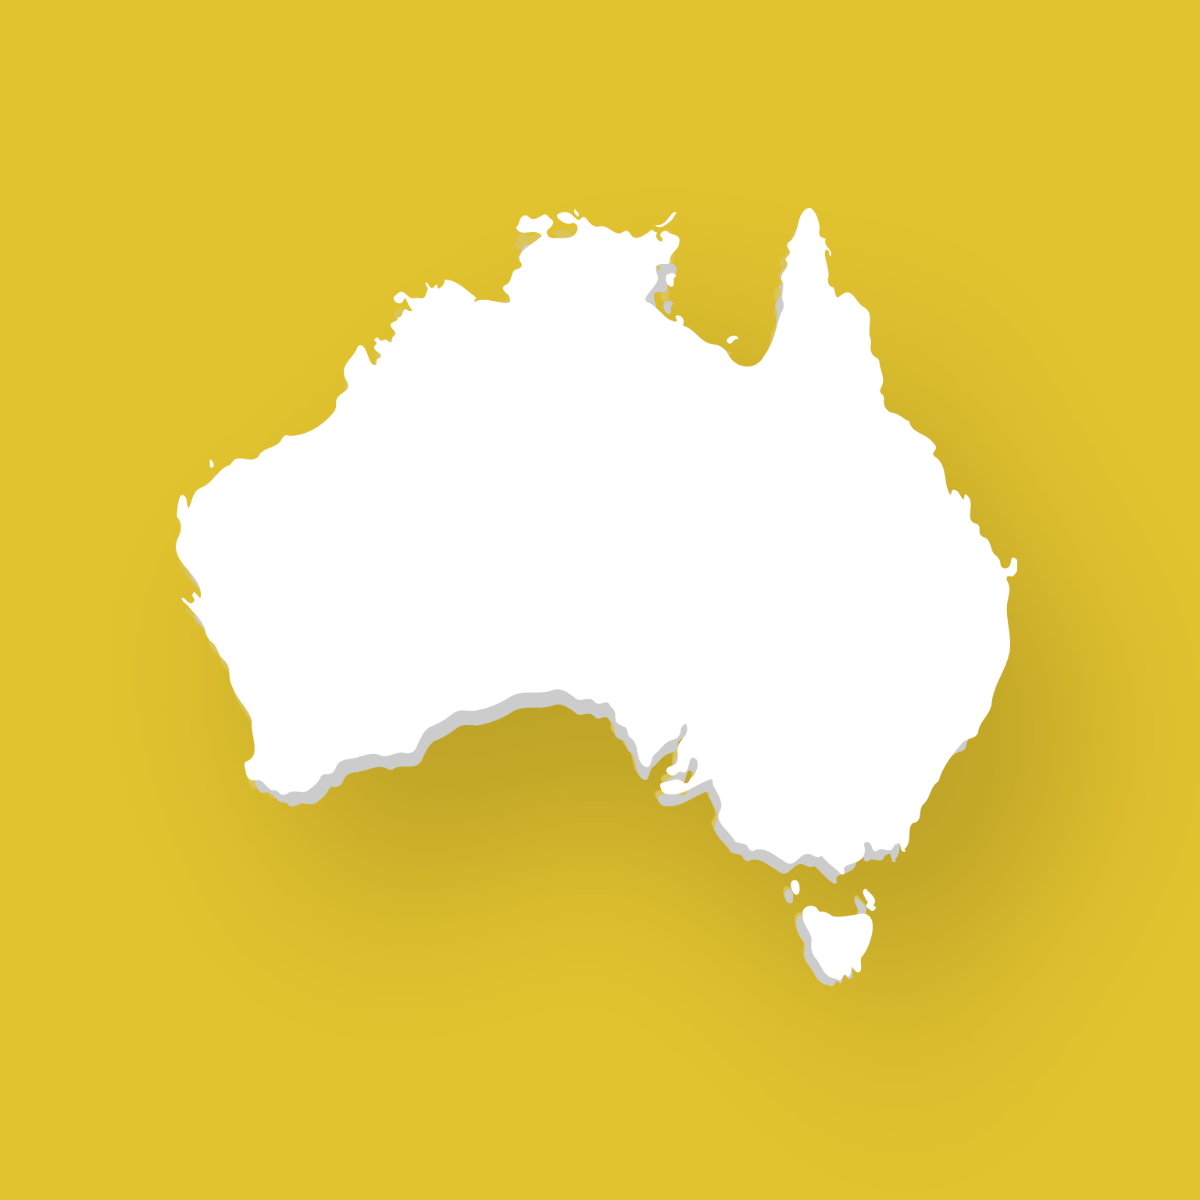 3D Australia Map Vector Template